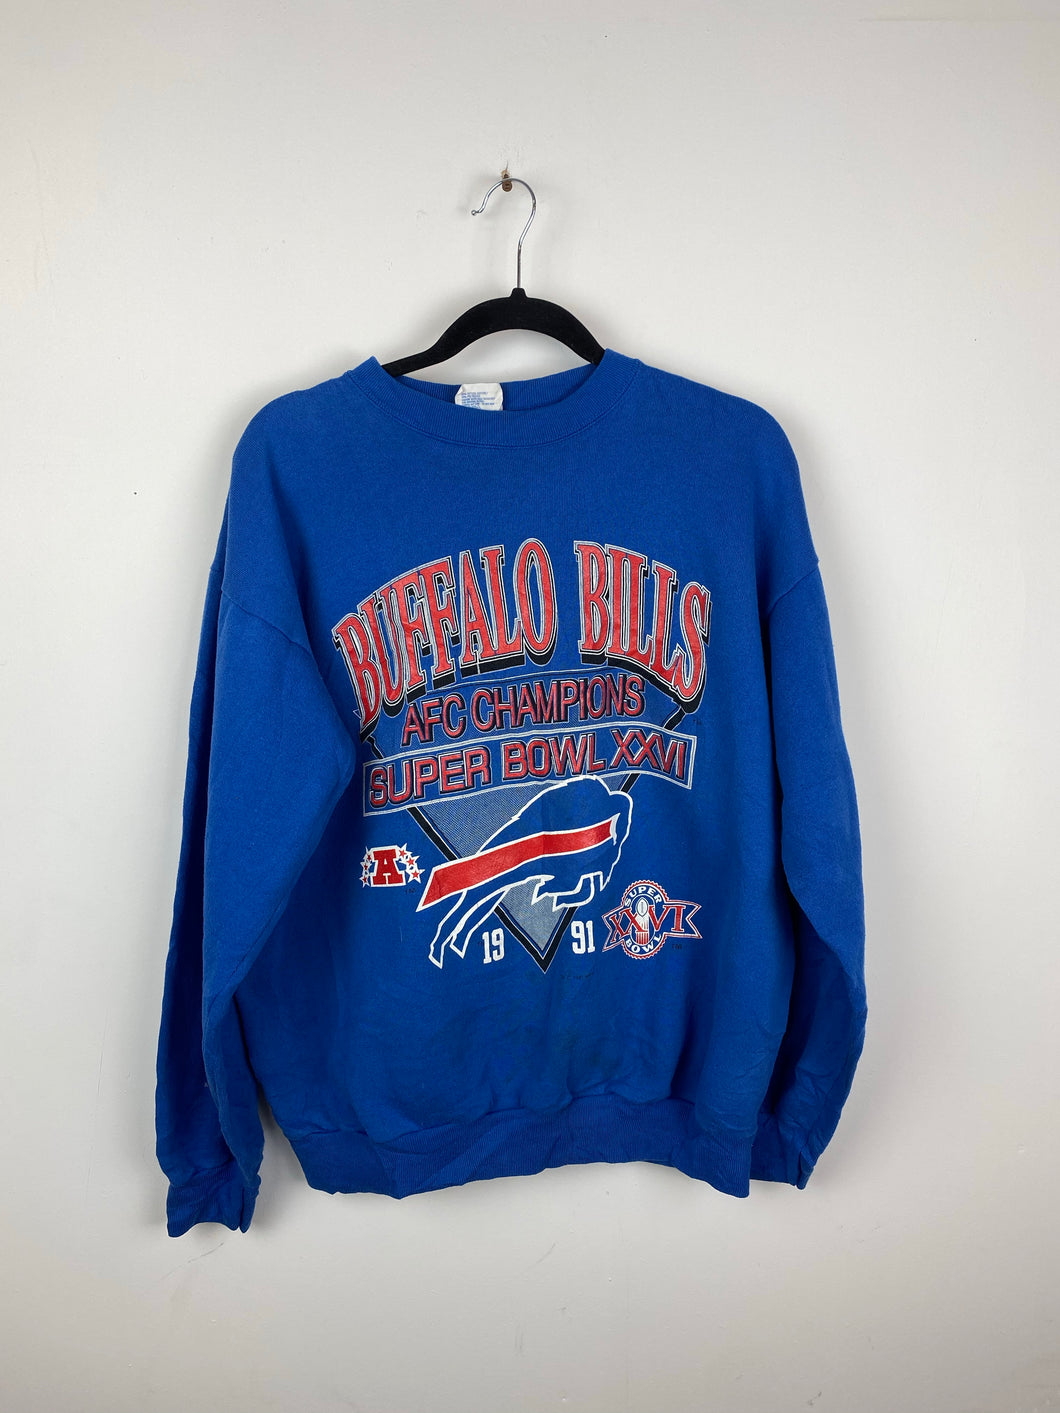 1991 Buffalo Bills crewneck